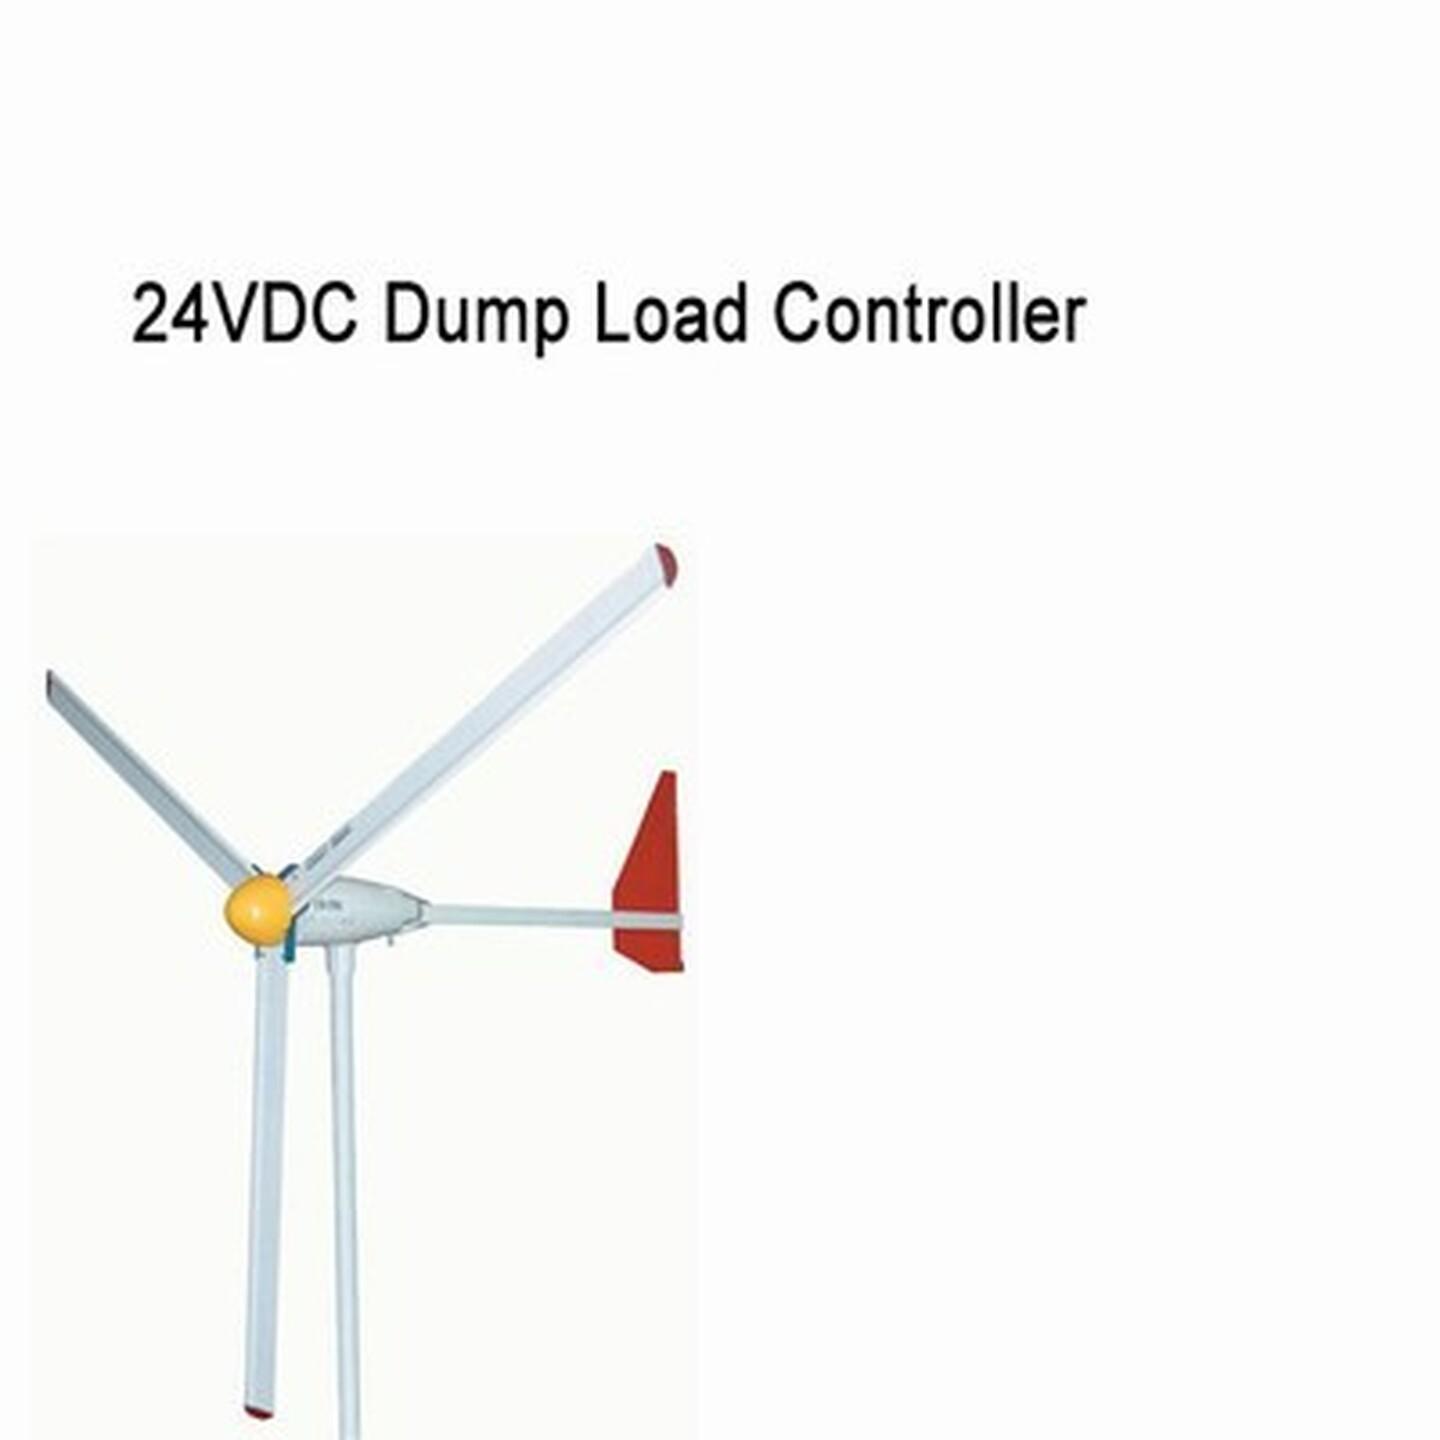 24VDC Dump Load Controller for MG-4542